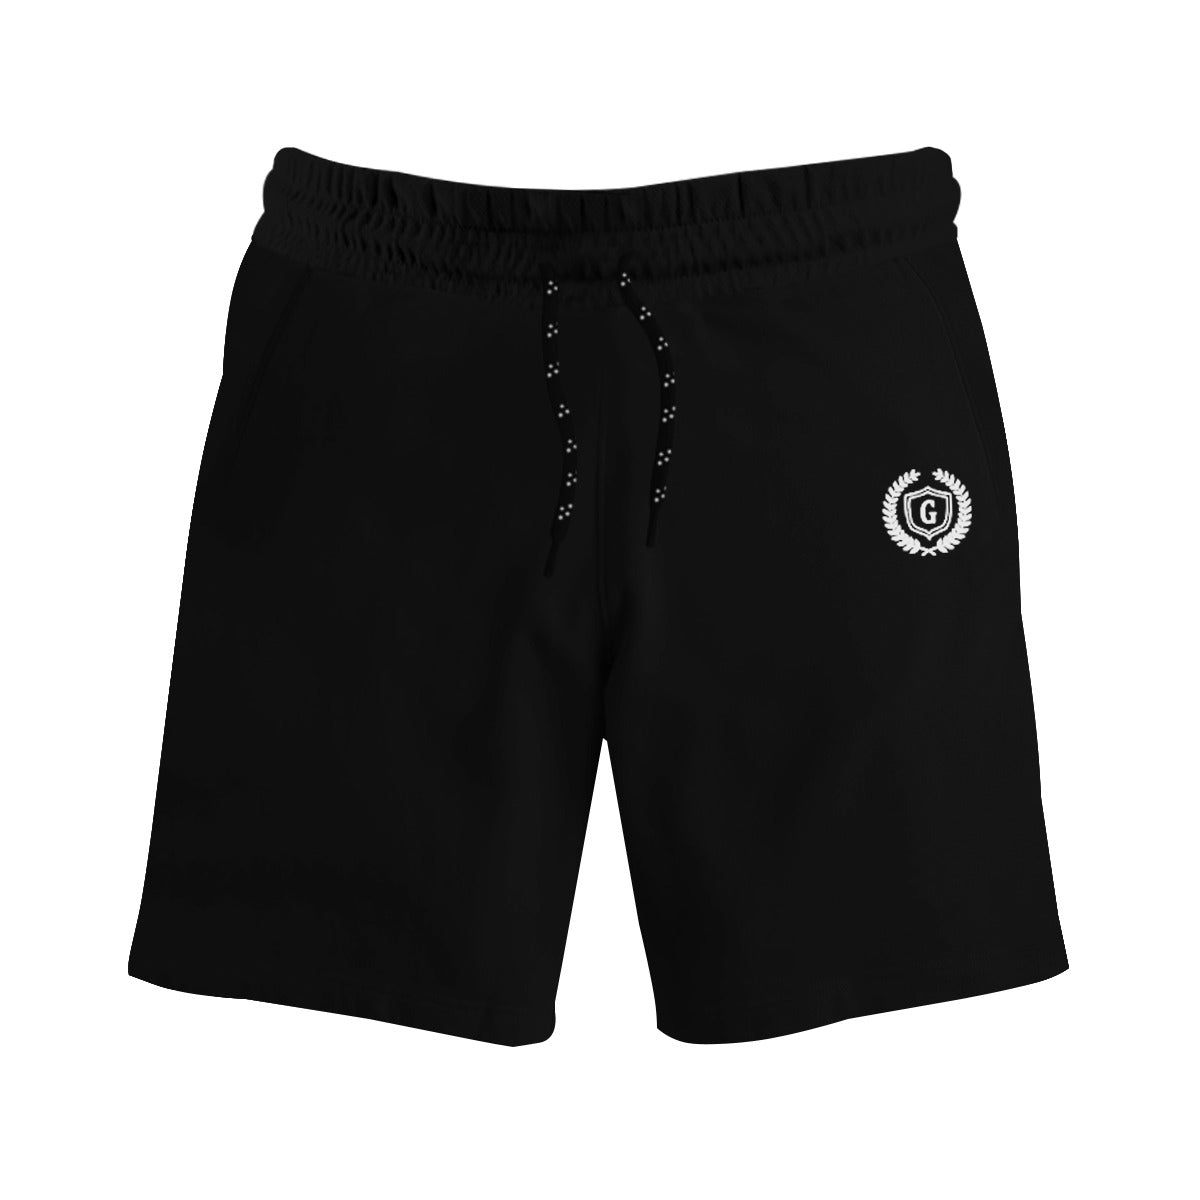 HG Signature Emb Two Quarter Summer Shorts - Black